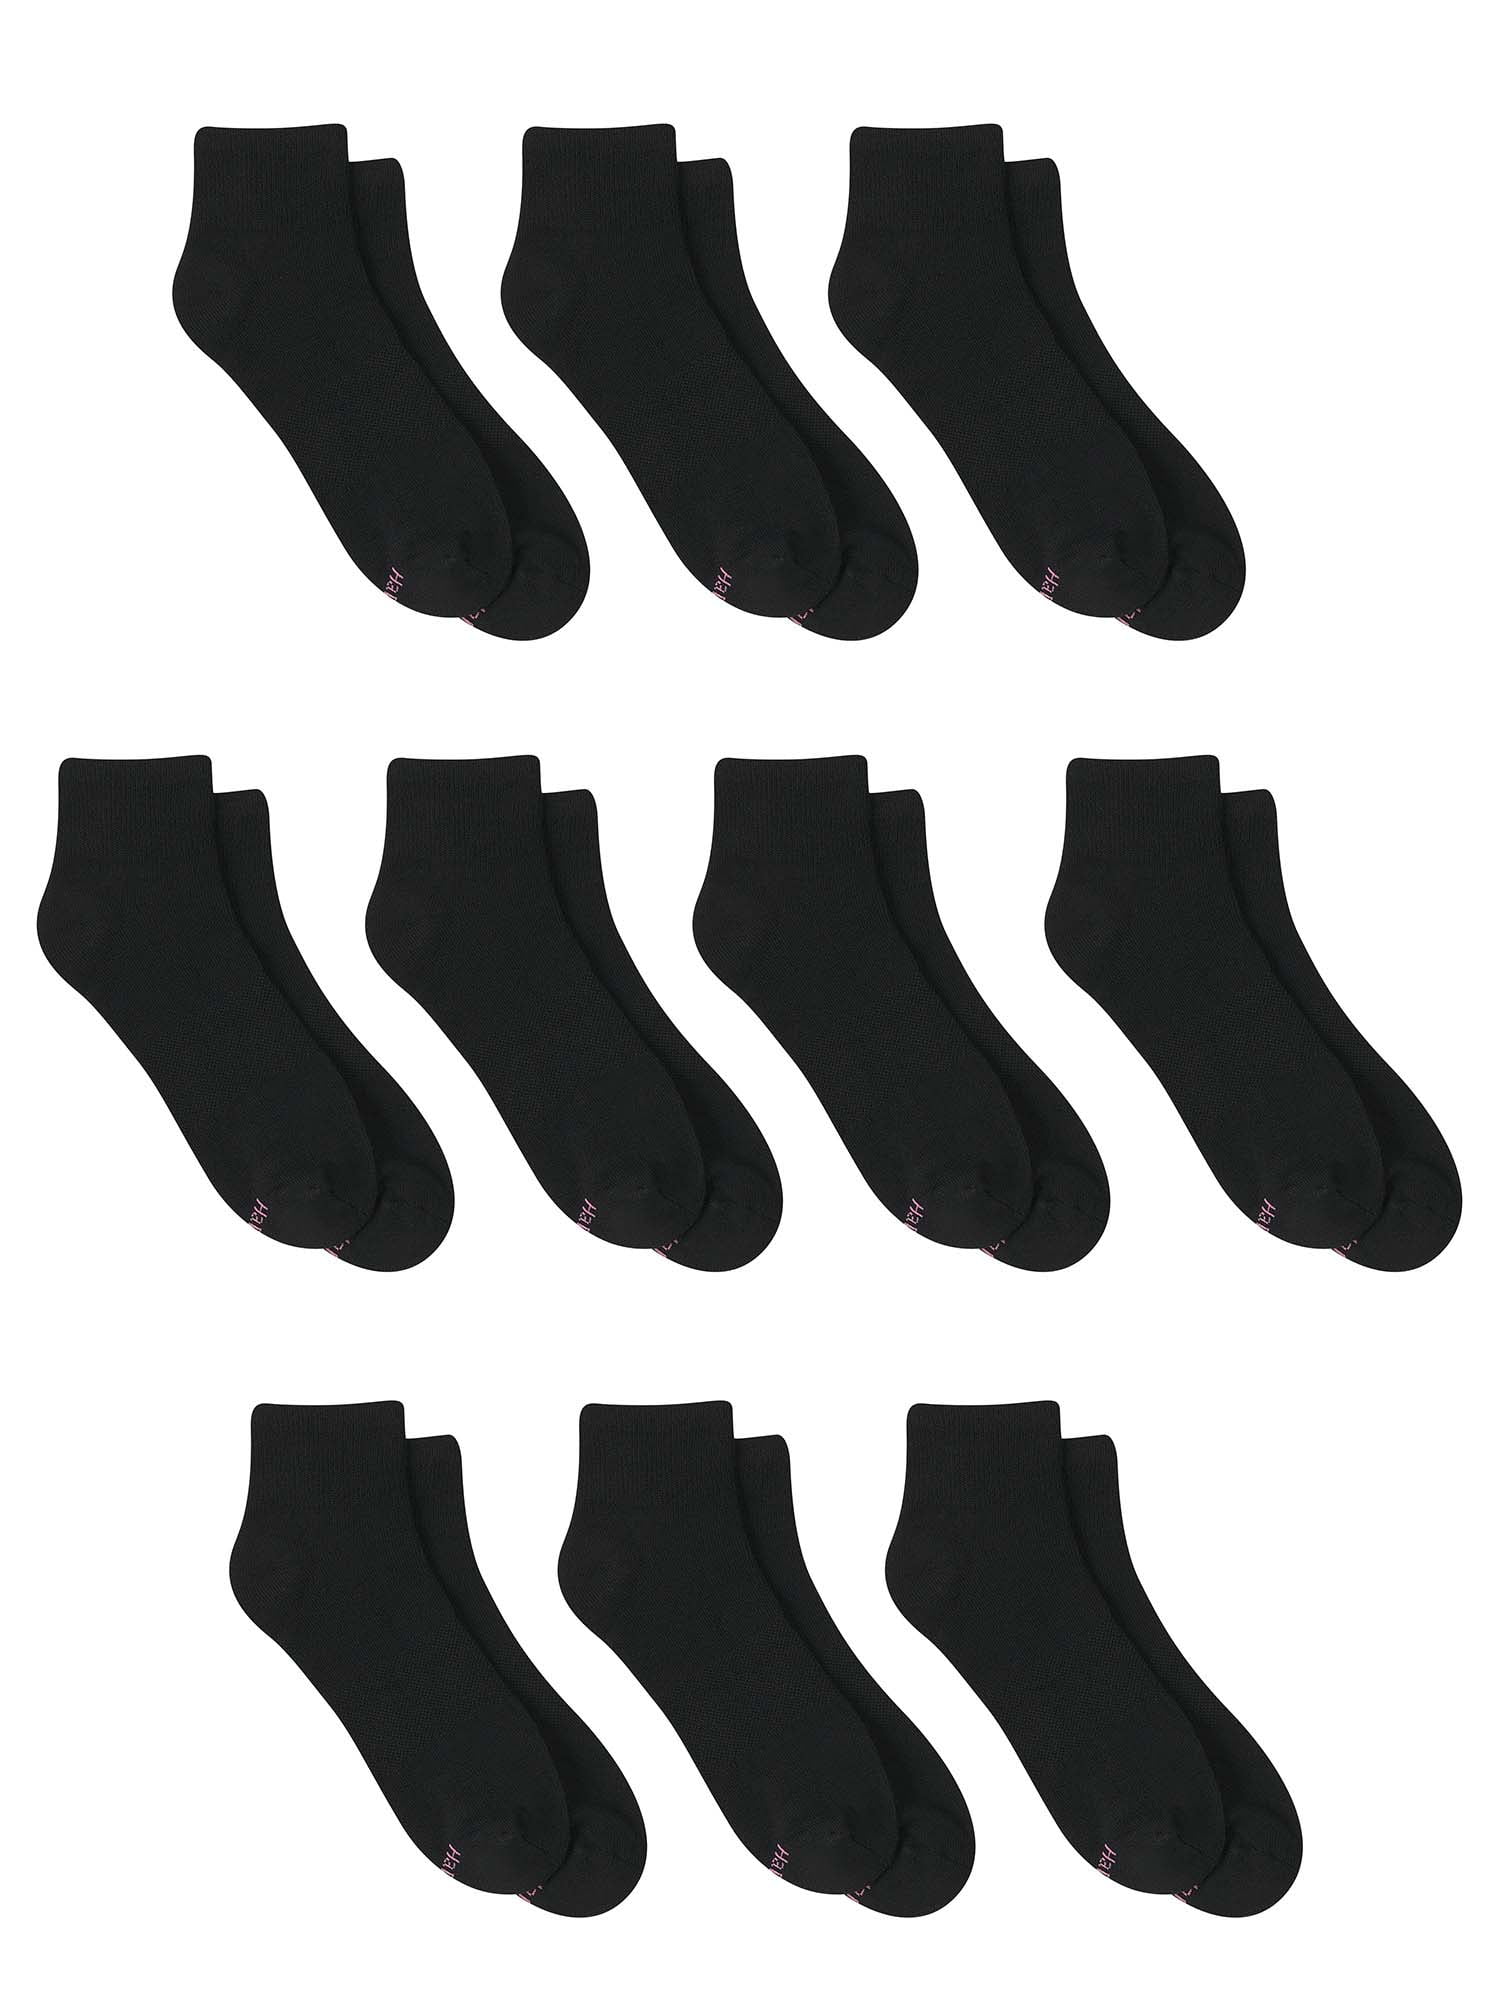 Hanes Women's Comfort Fit Ankle Socks 10-pack - Walmart.com